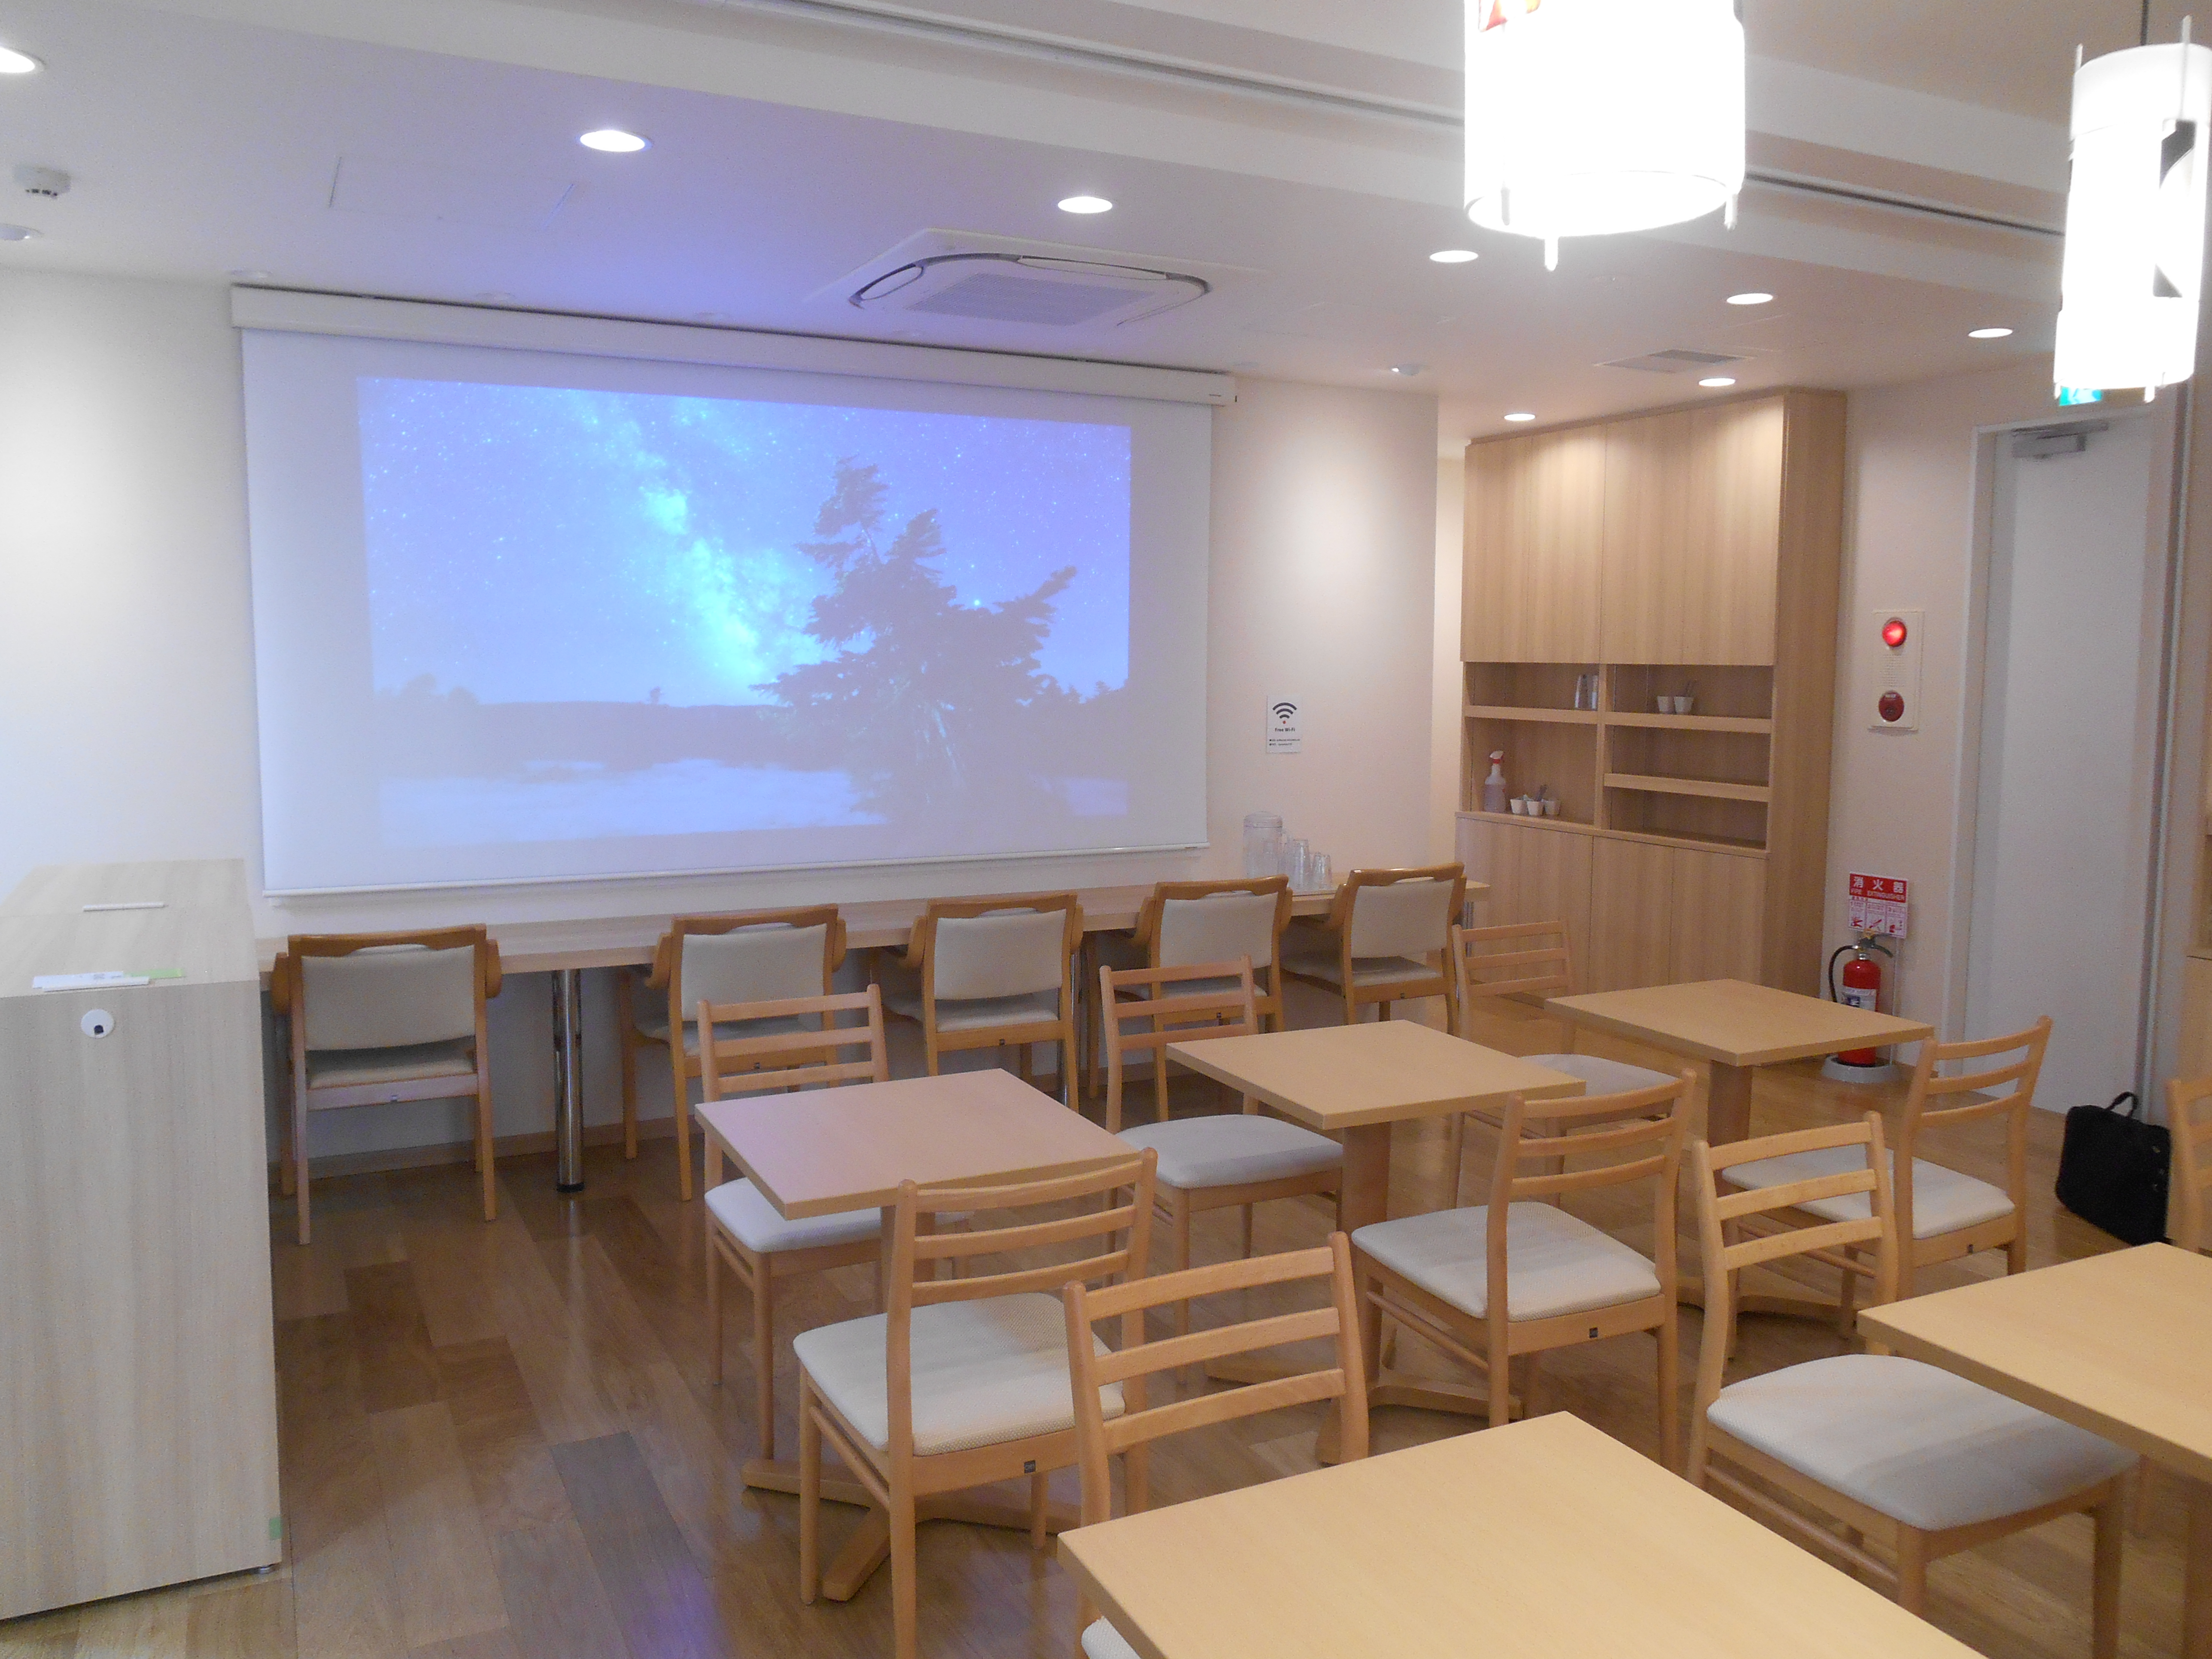 DSCN1359 - AoMoLink〜赤坂〜の第2回勉強会&交流会開催します。